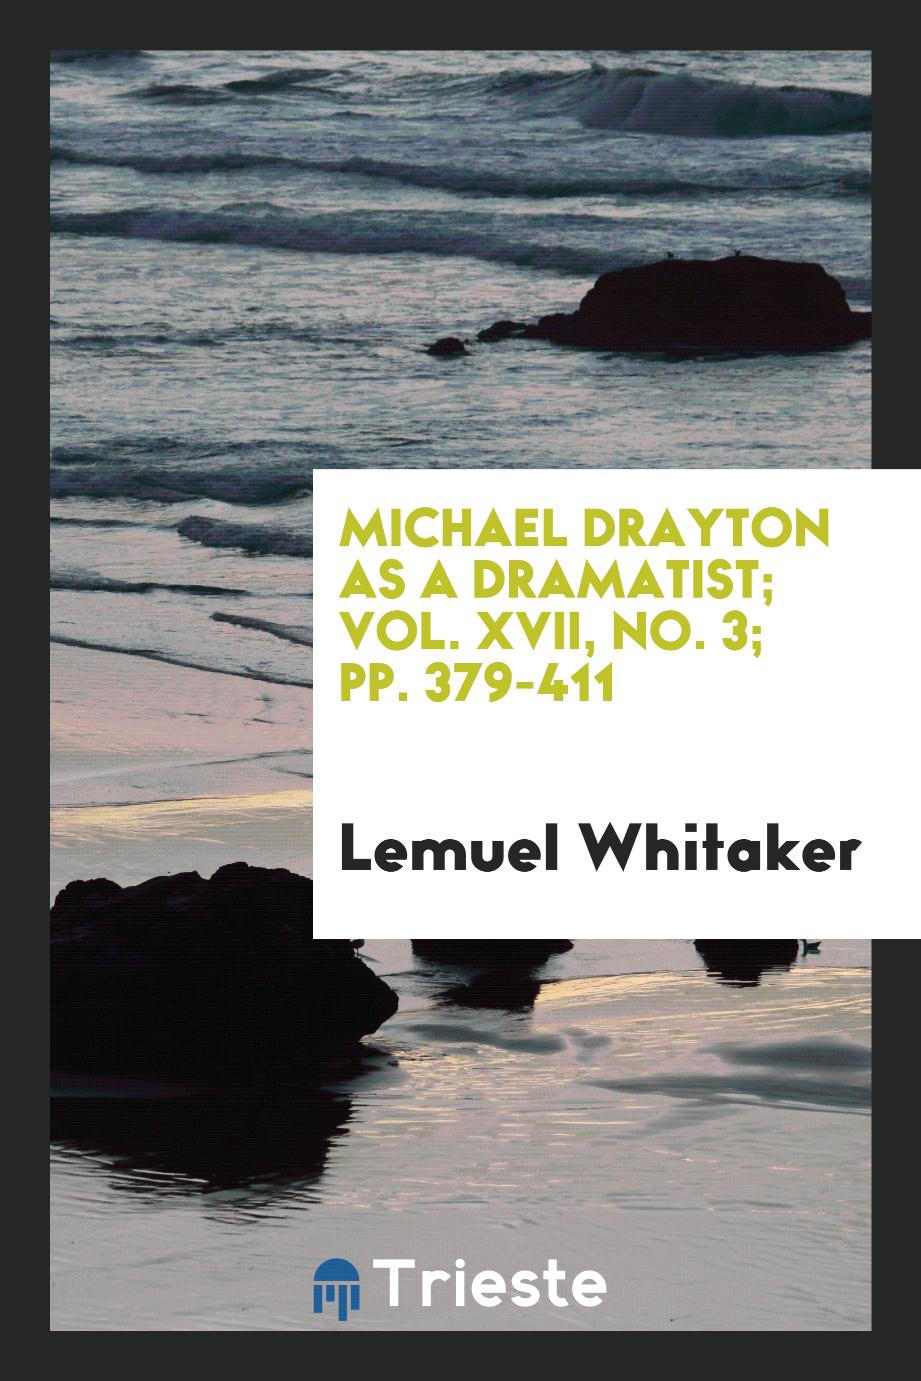 Michael Drayton as a dramatist; Vol. XVII, No. 3; pp. 379-411